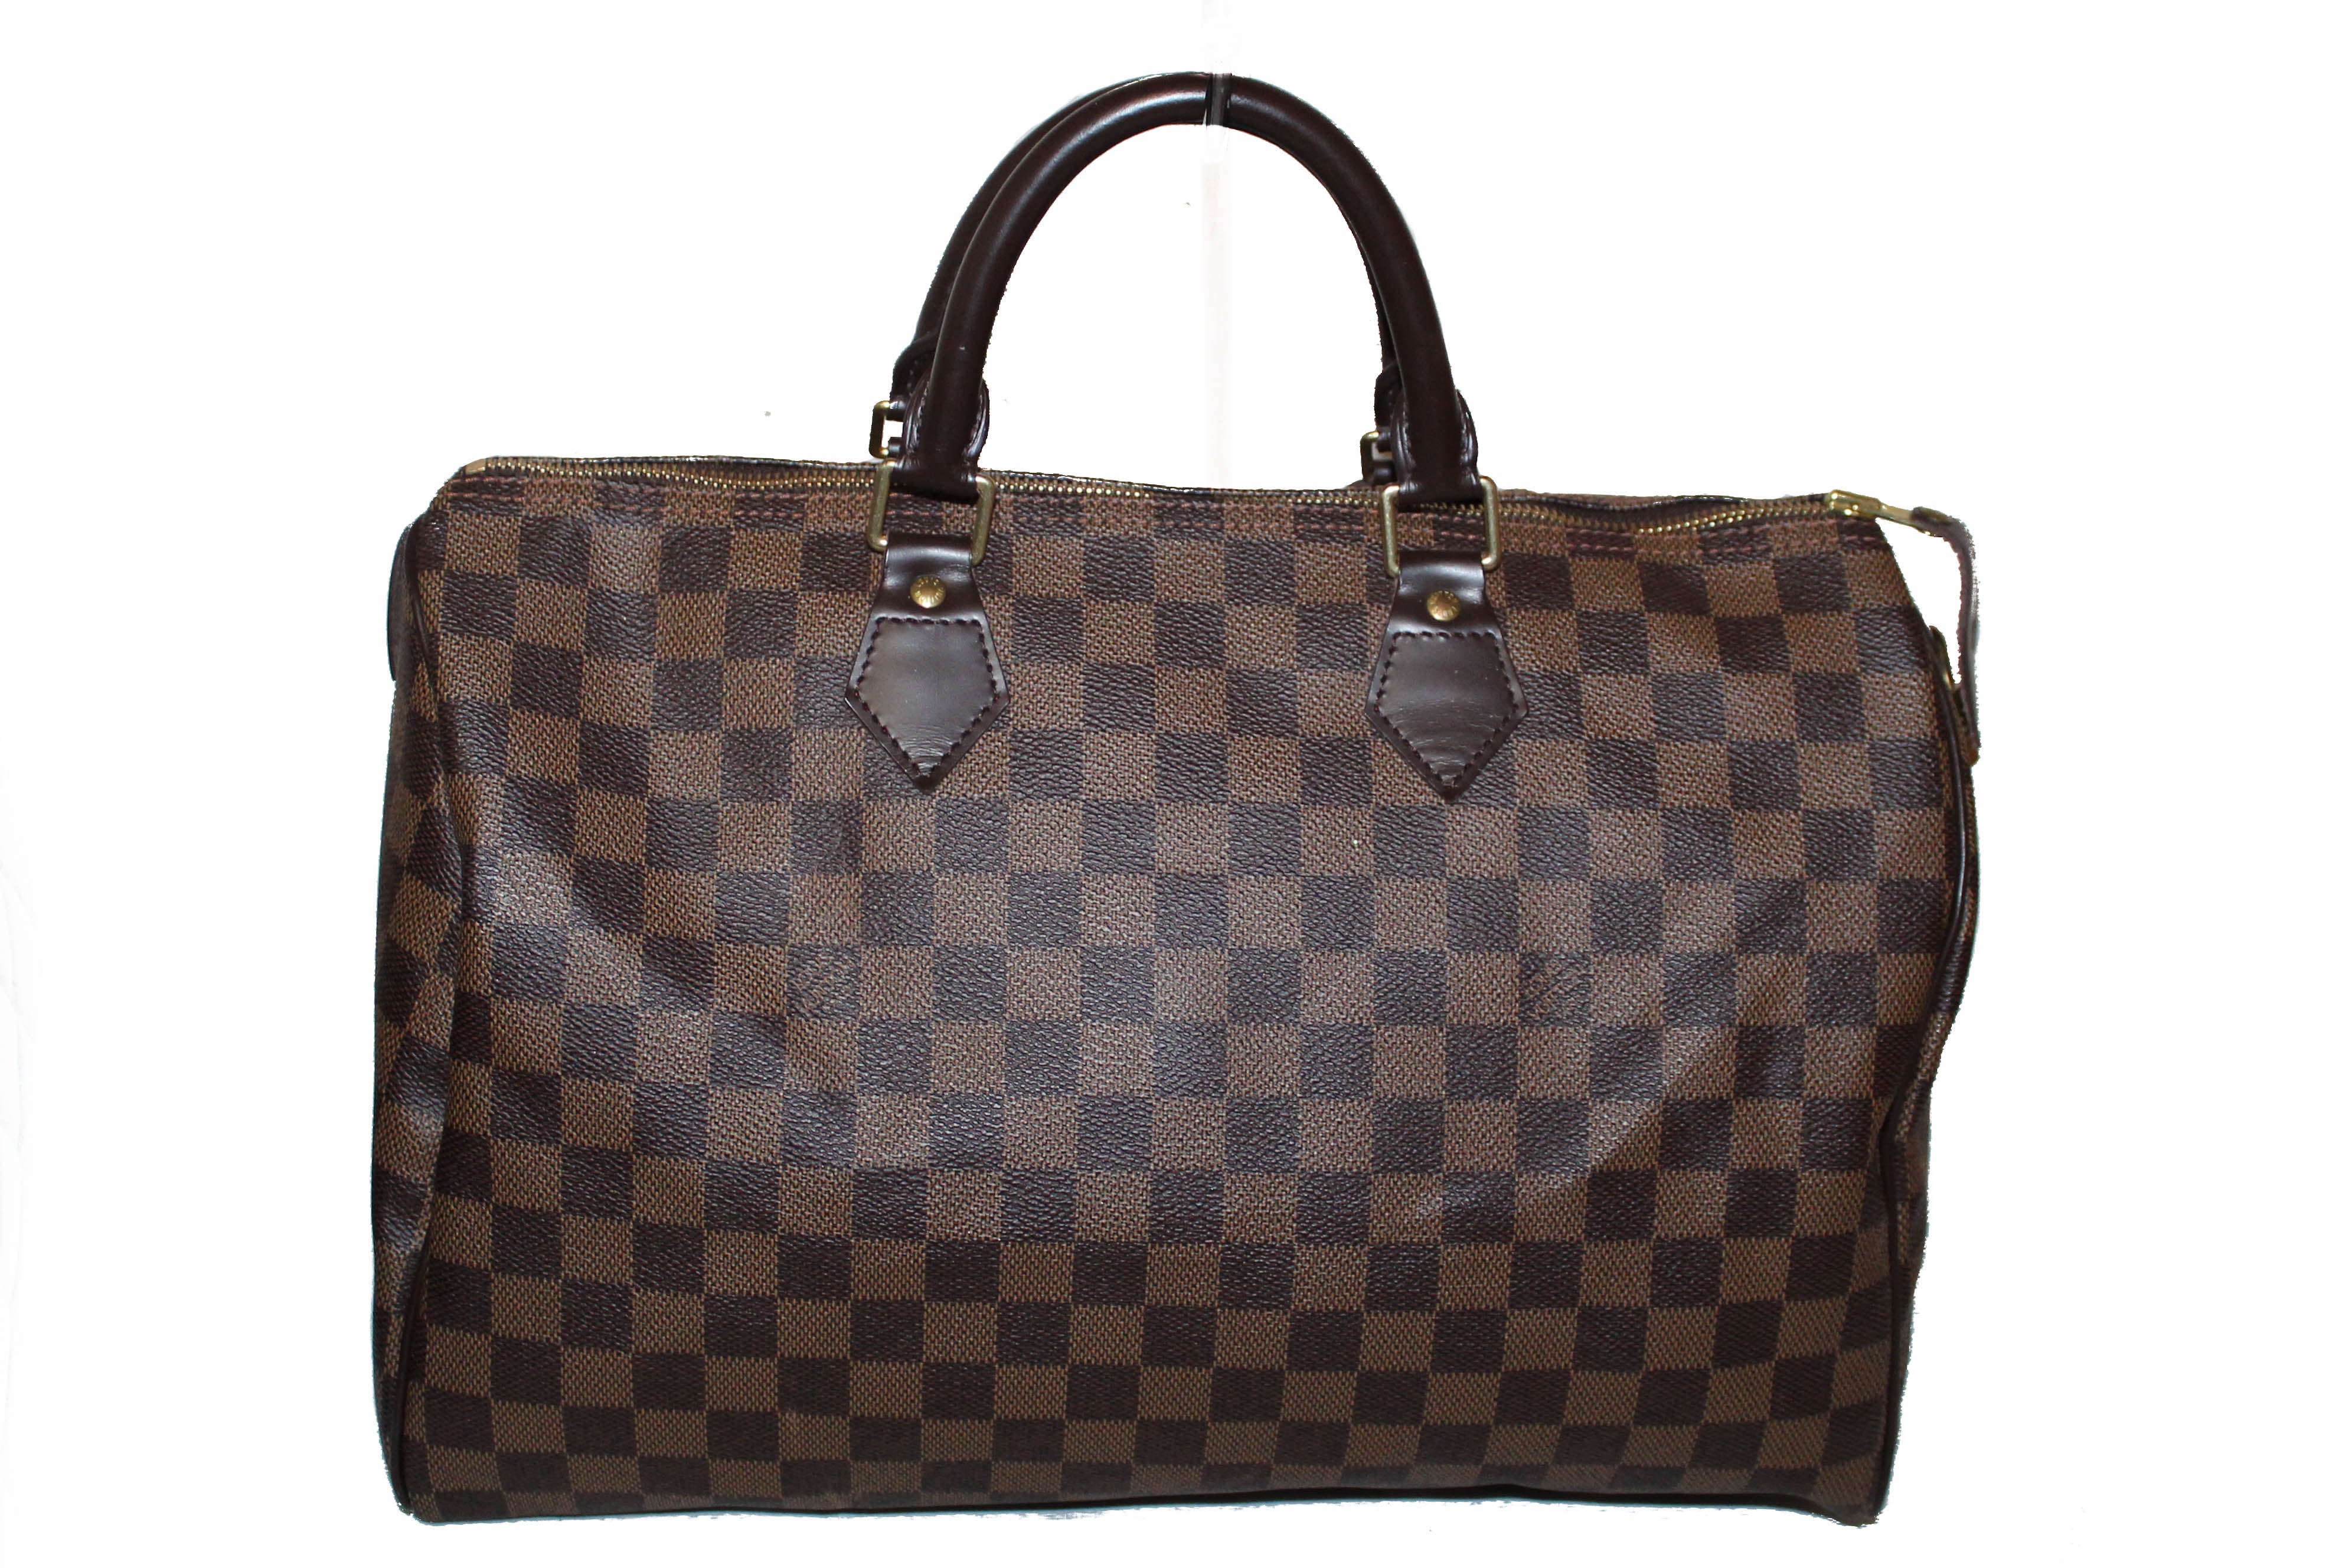 Louis Vuitton Speedy 35 Damier Canvas Bag